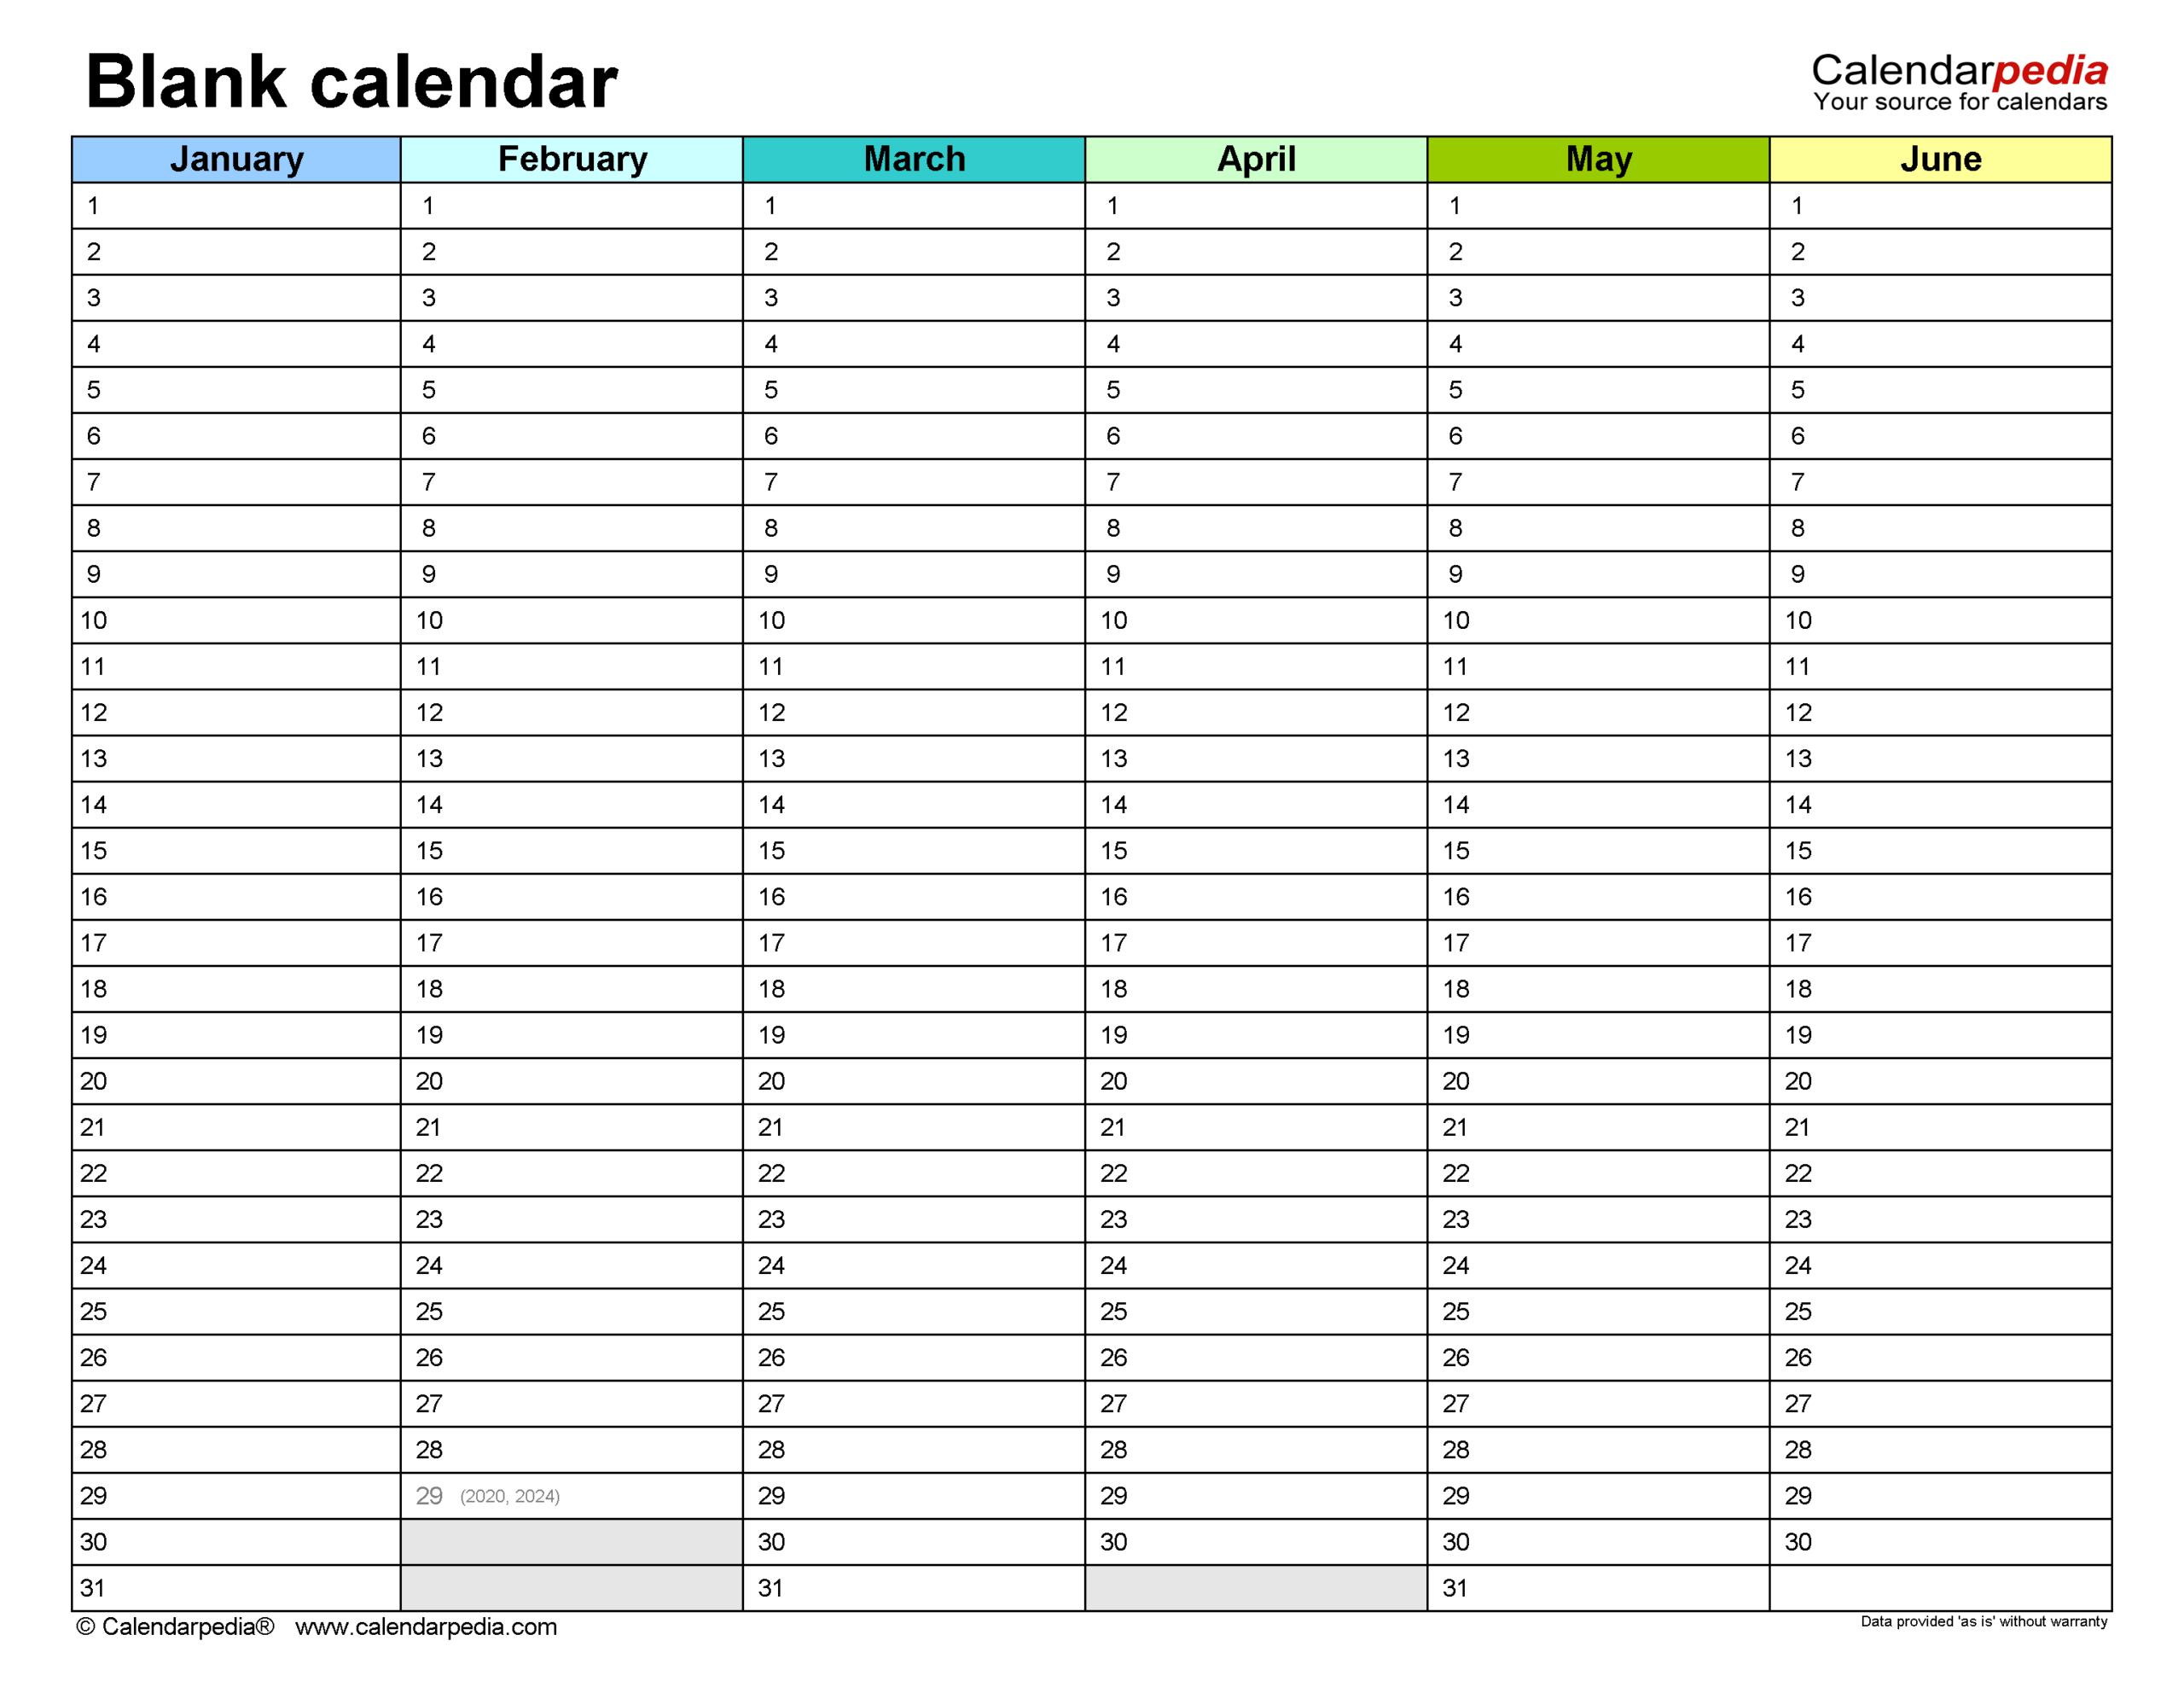 Blank Calendars  Free Printable Microsoft Word Templates regarding Empty Calendar Printable